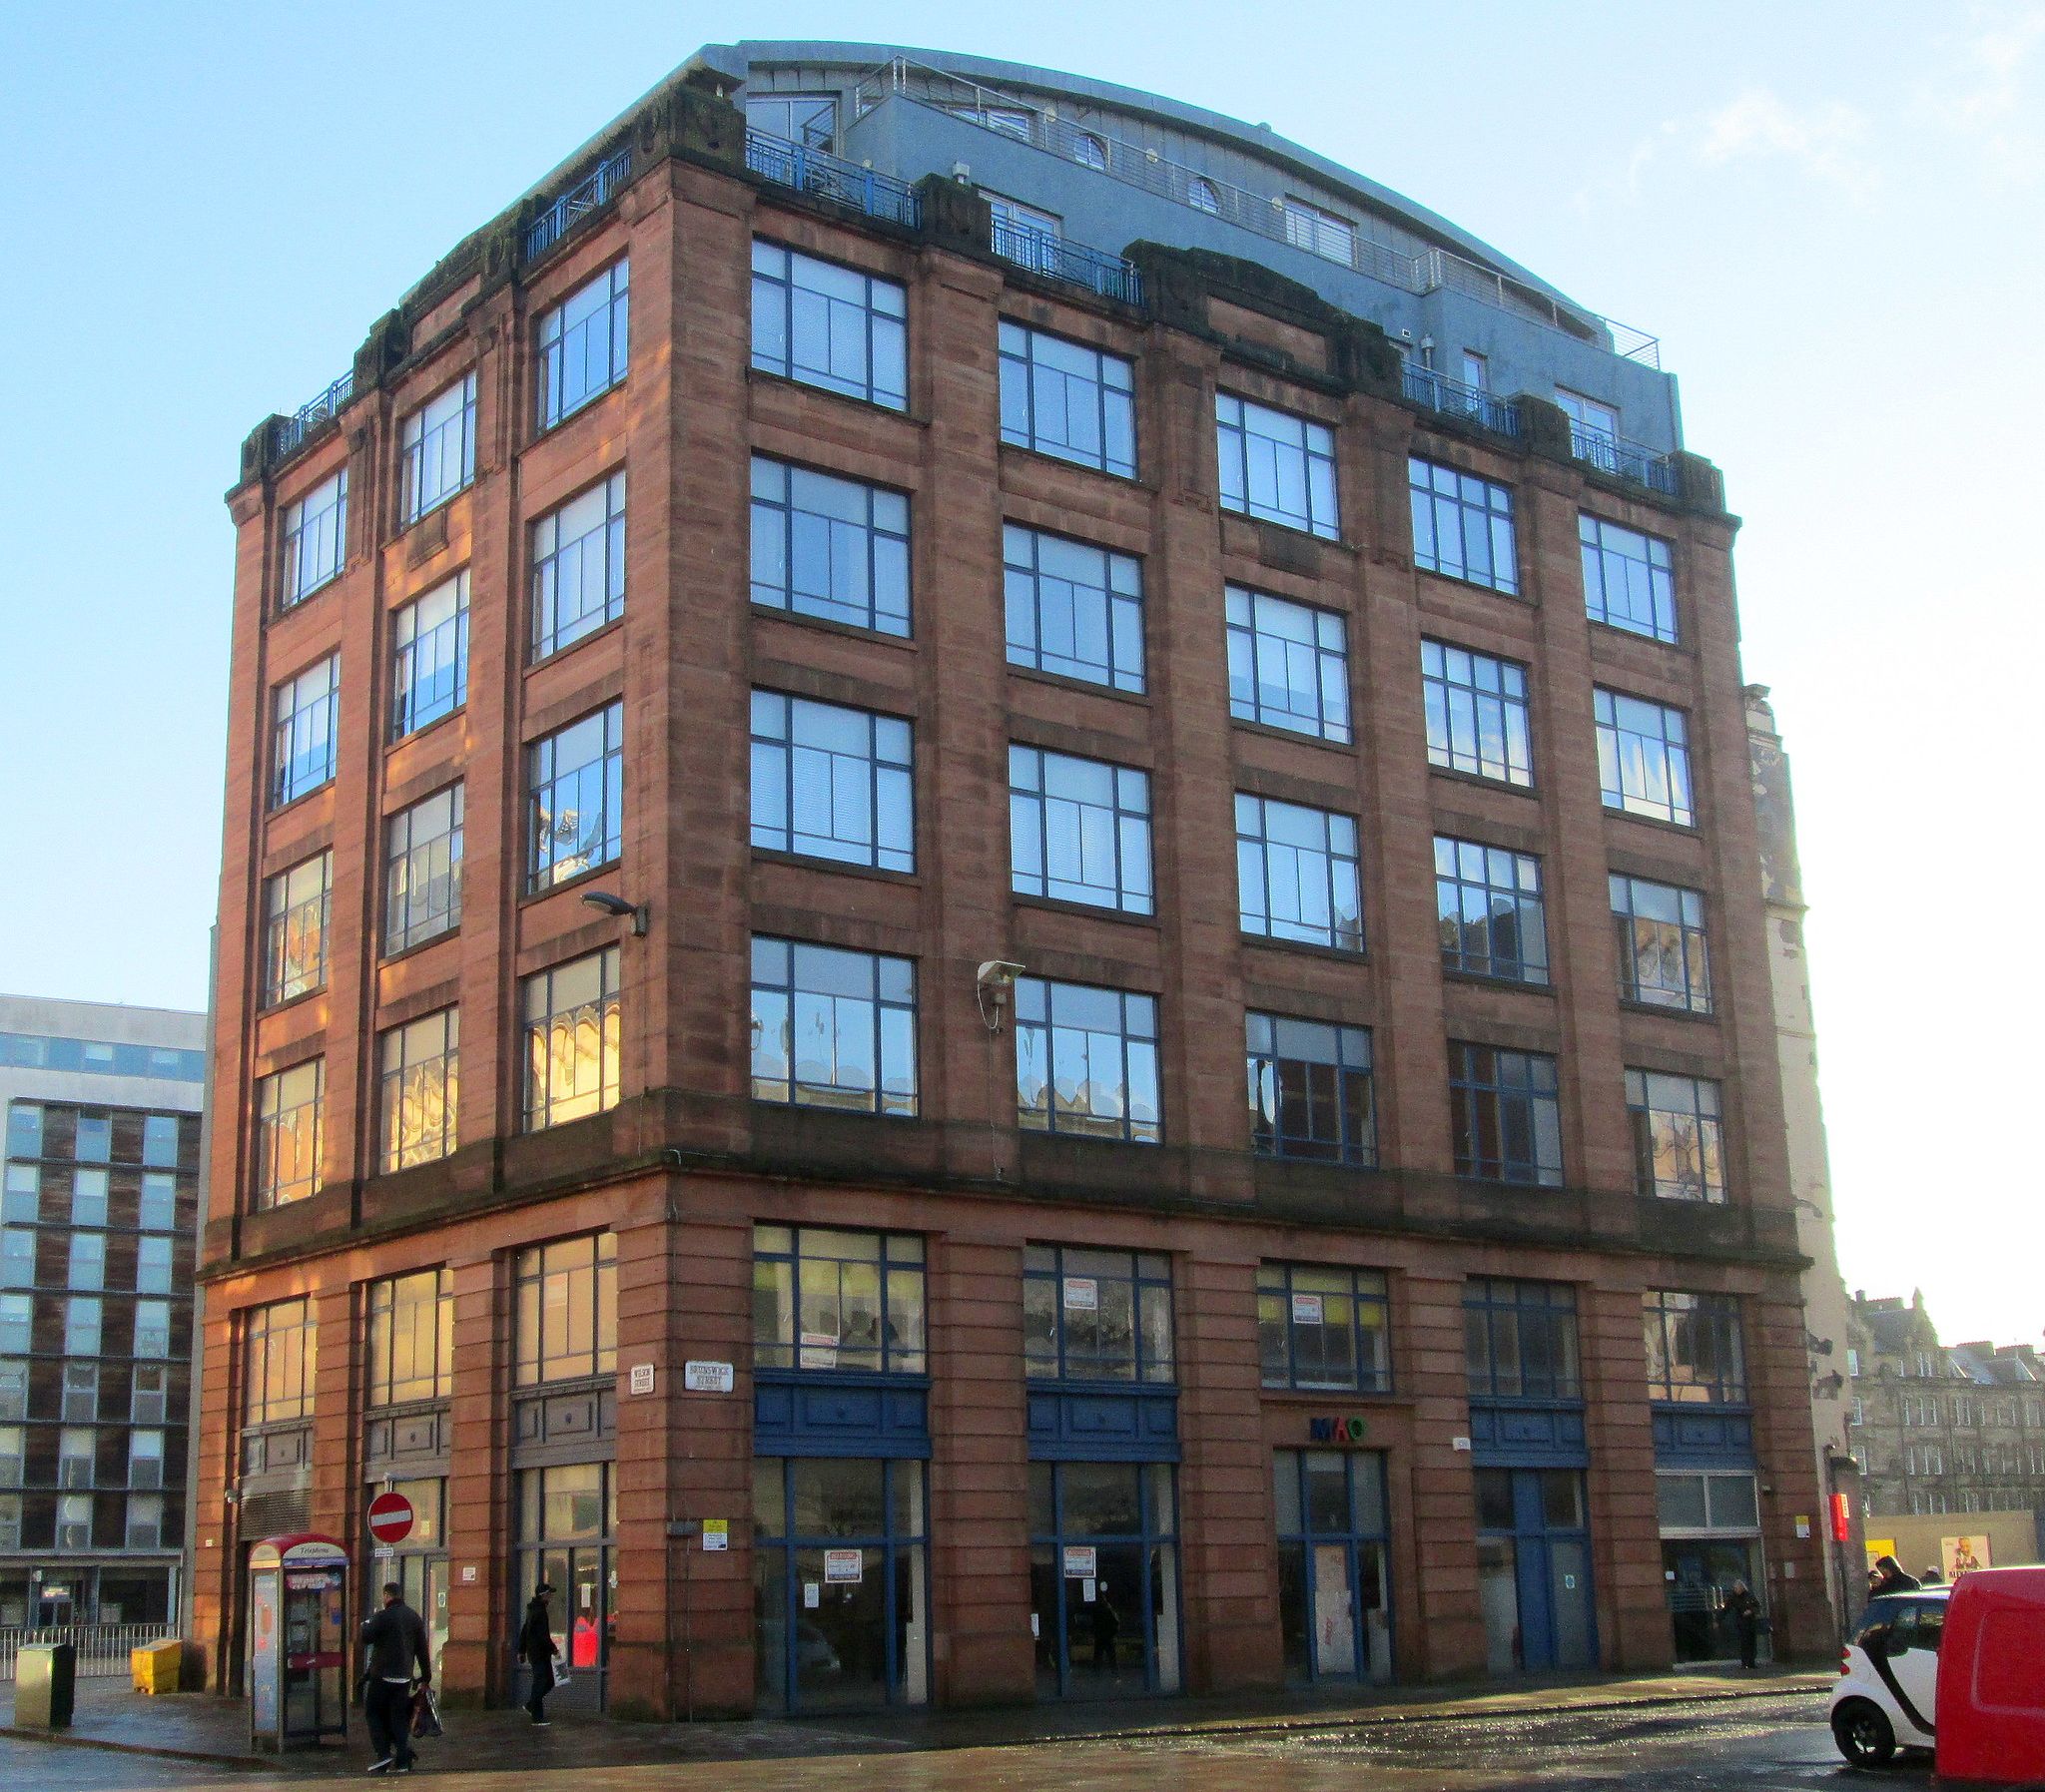 Art Deco building in the Merchant City area of Glasgow